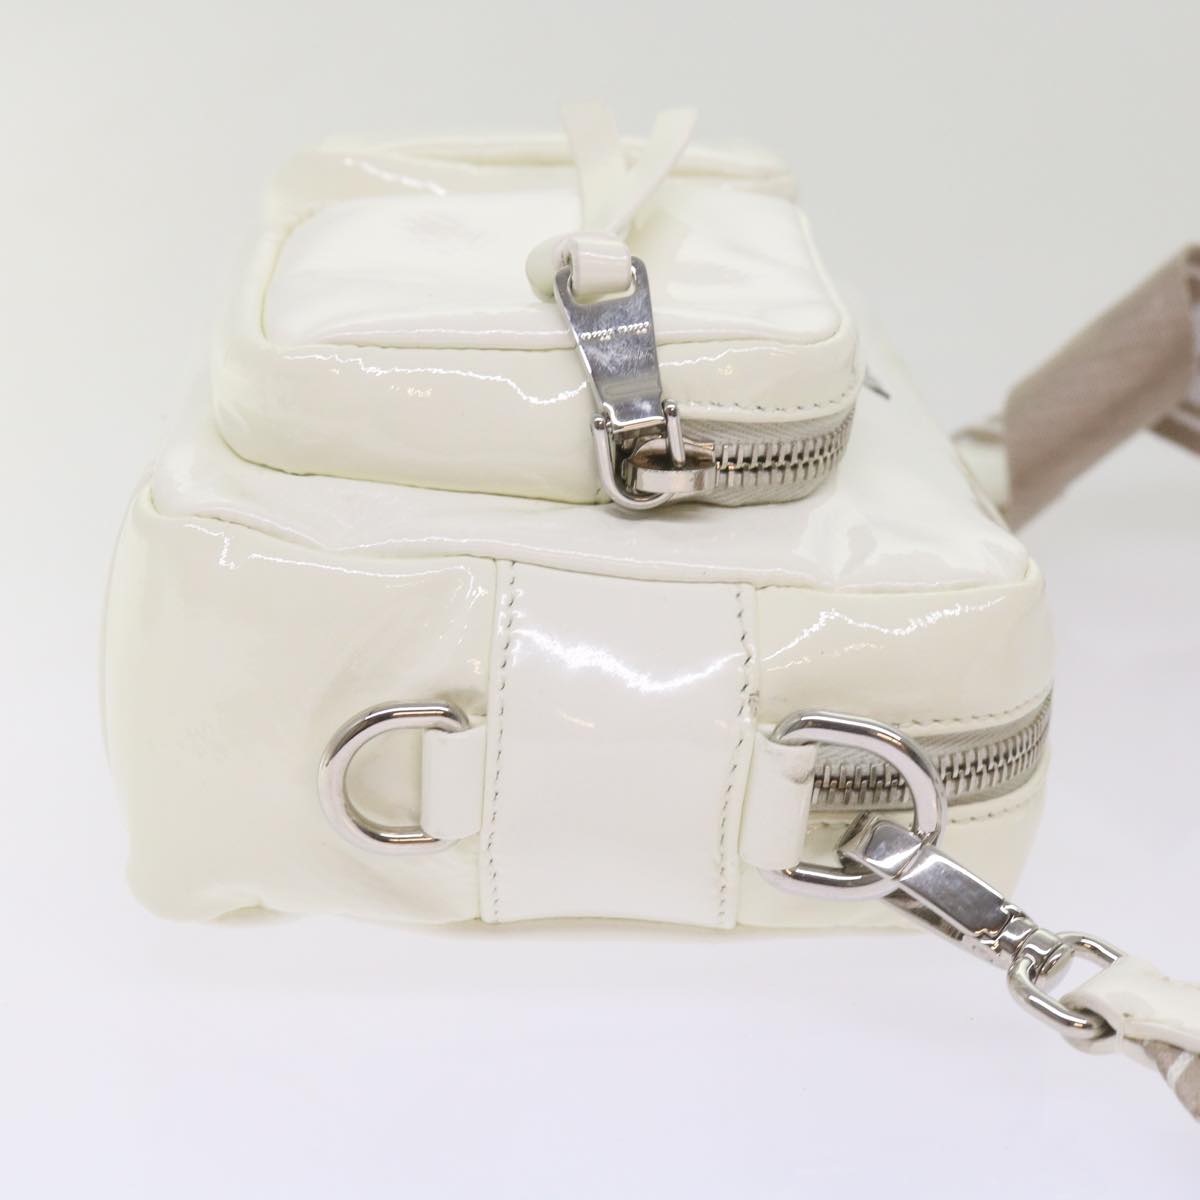 Miu Miu Shoulder Bag Enamel White Auth 66701